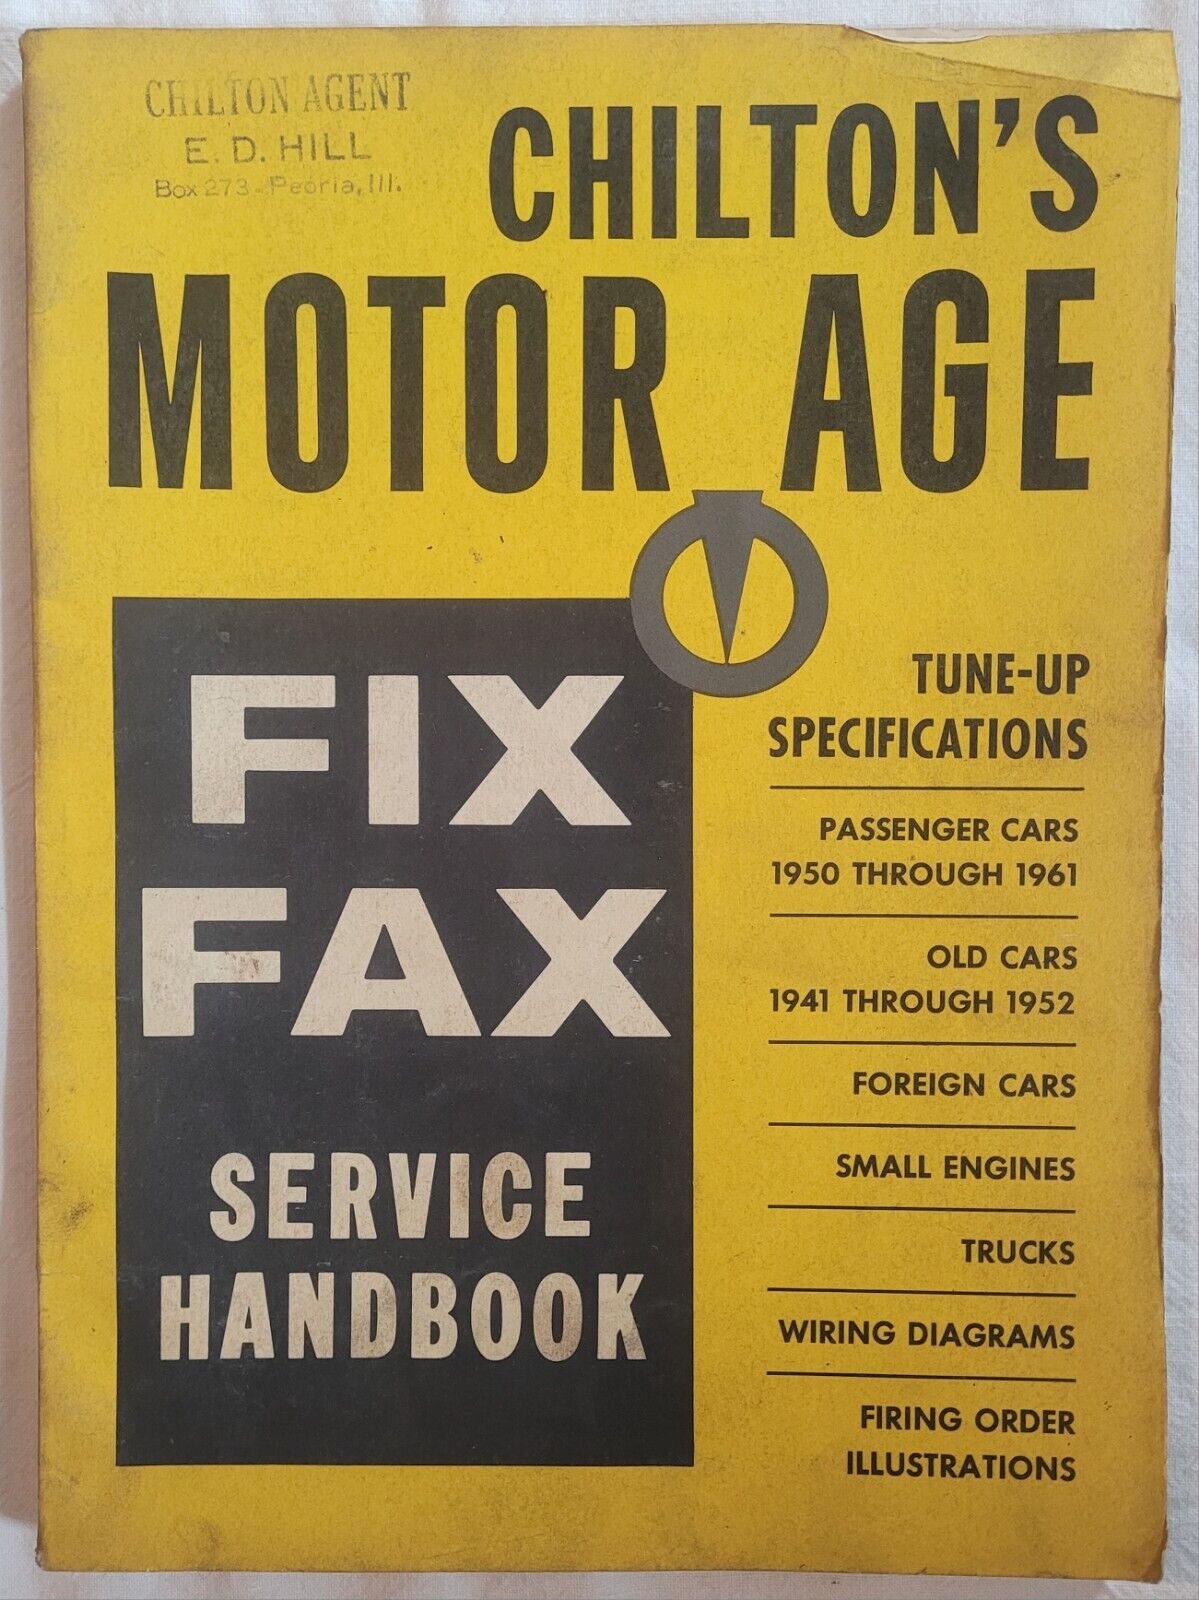 1961 Chilton's Motor Age Fix Fax Service Handbook 1941 - 1961 Cars Trucks